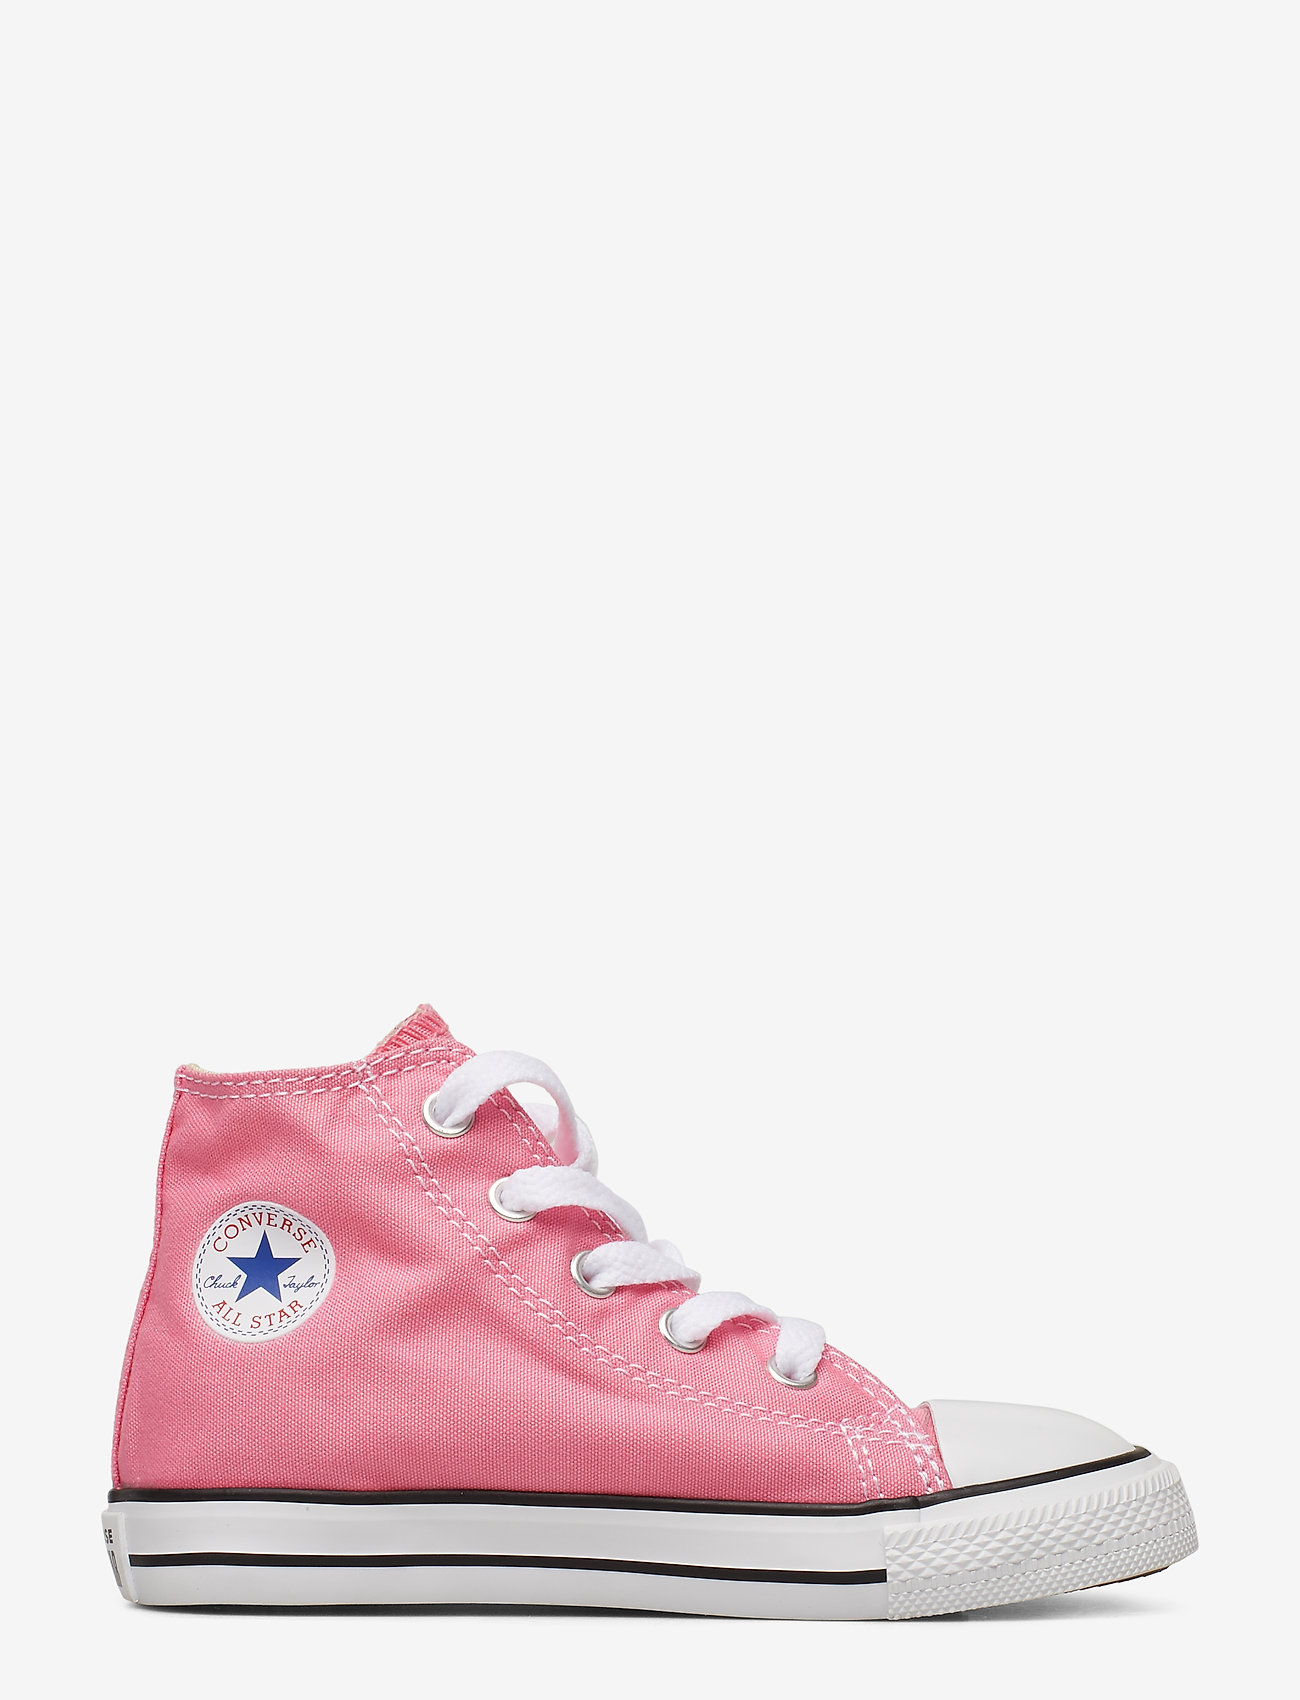 Converse - Chuck Taylor All Star - kinder - pink - 1